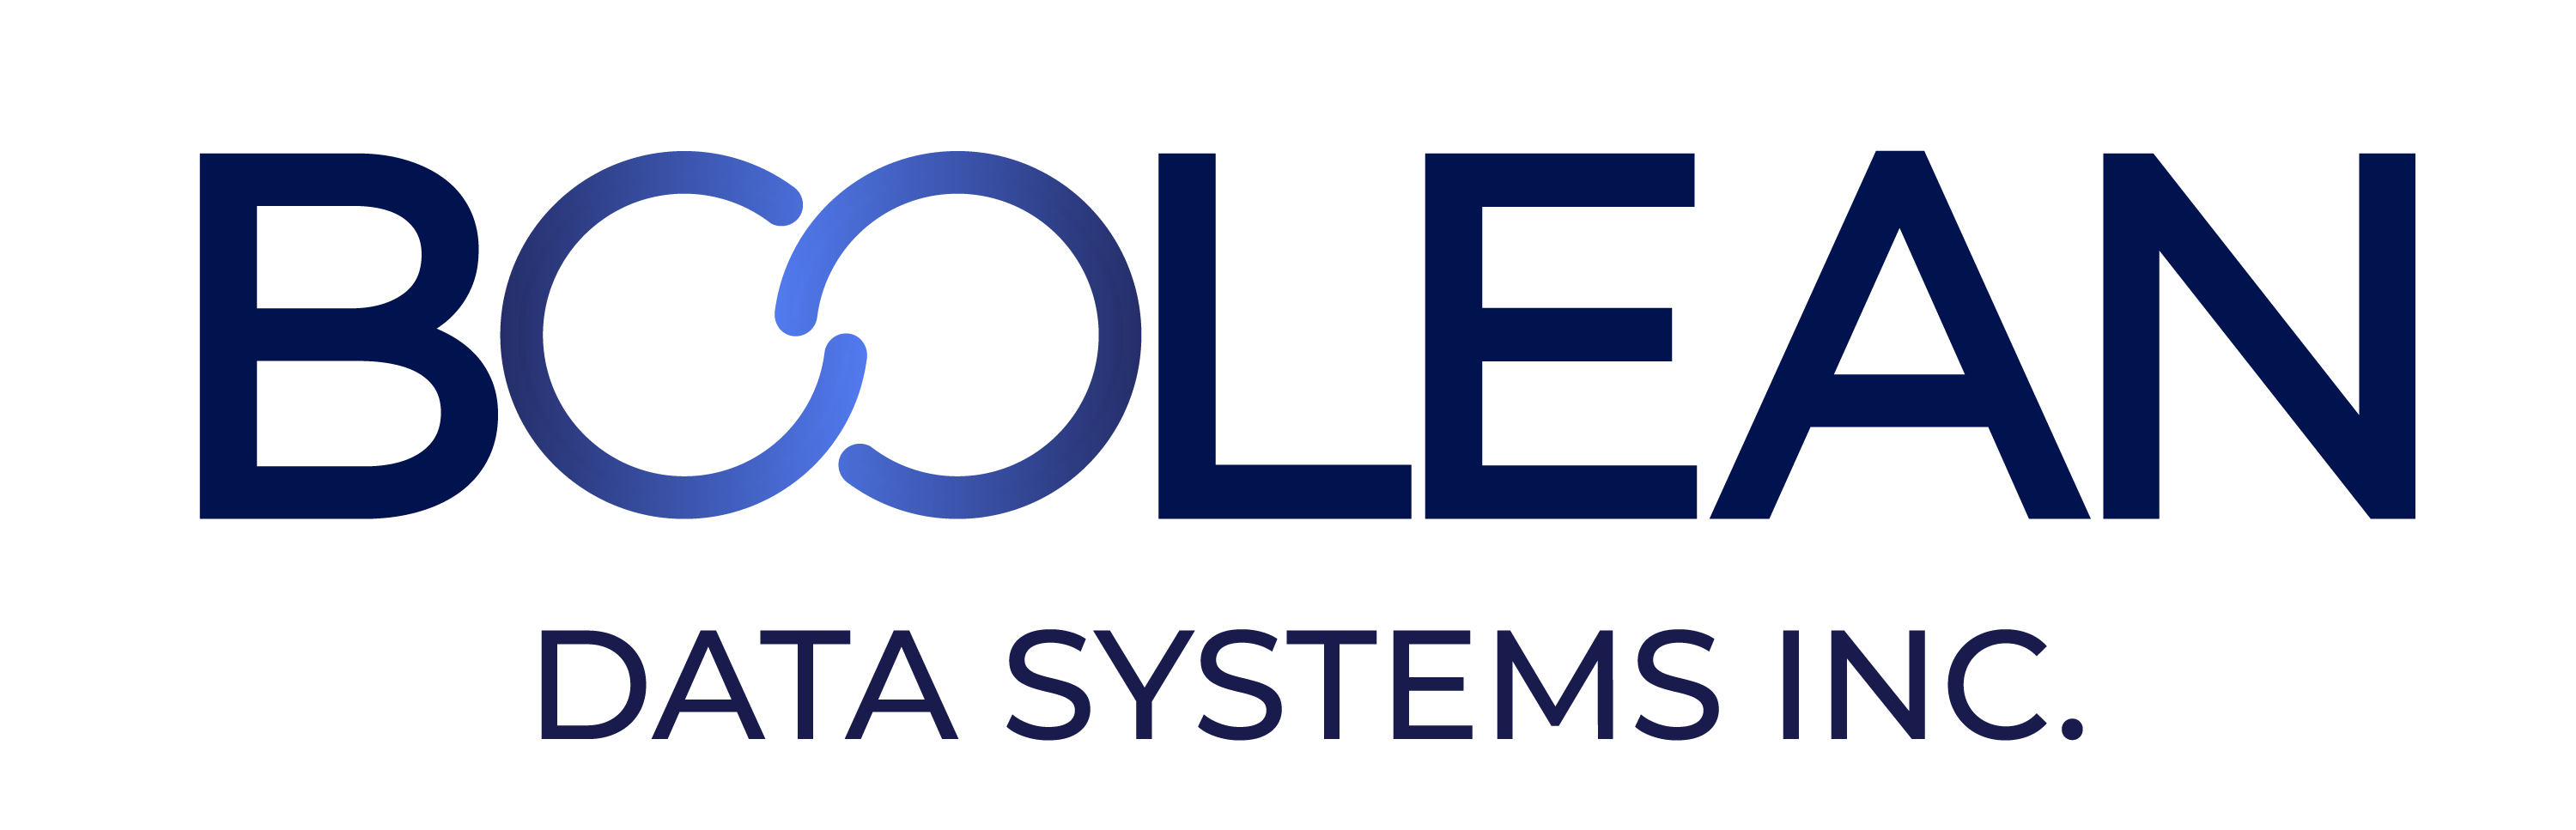 Boolean Data Systems